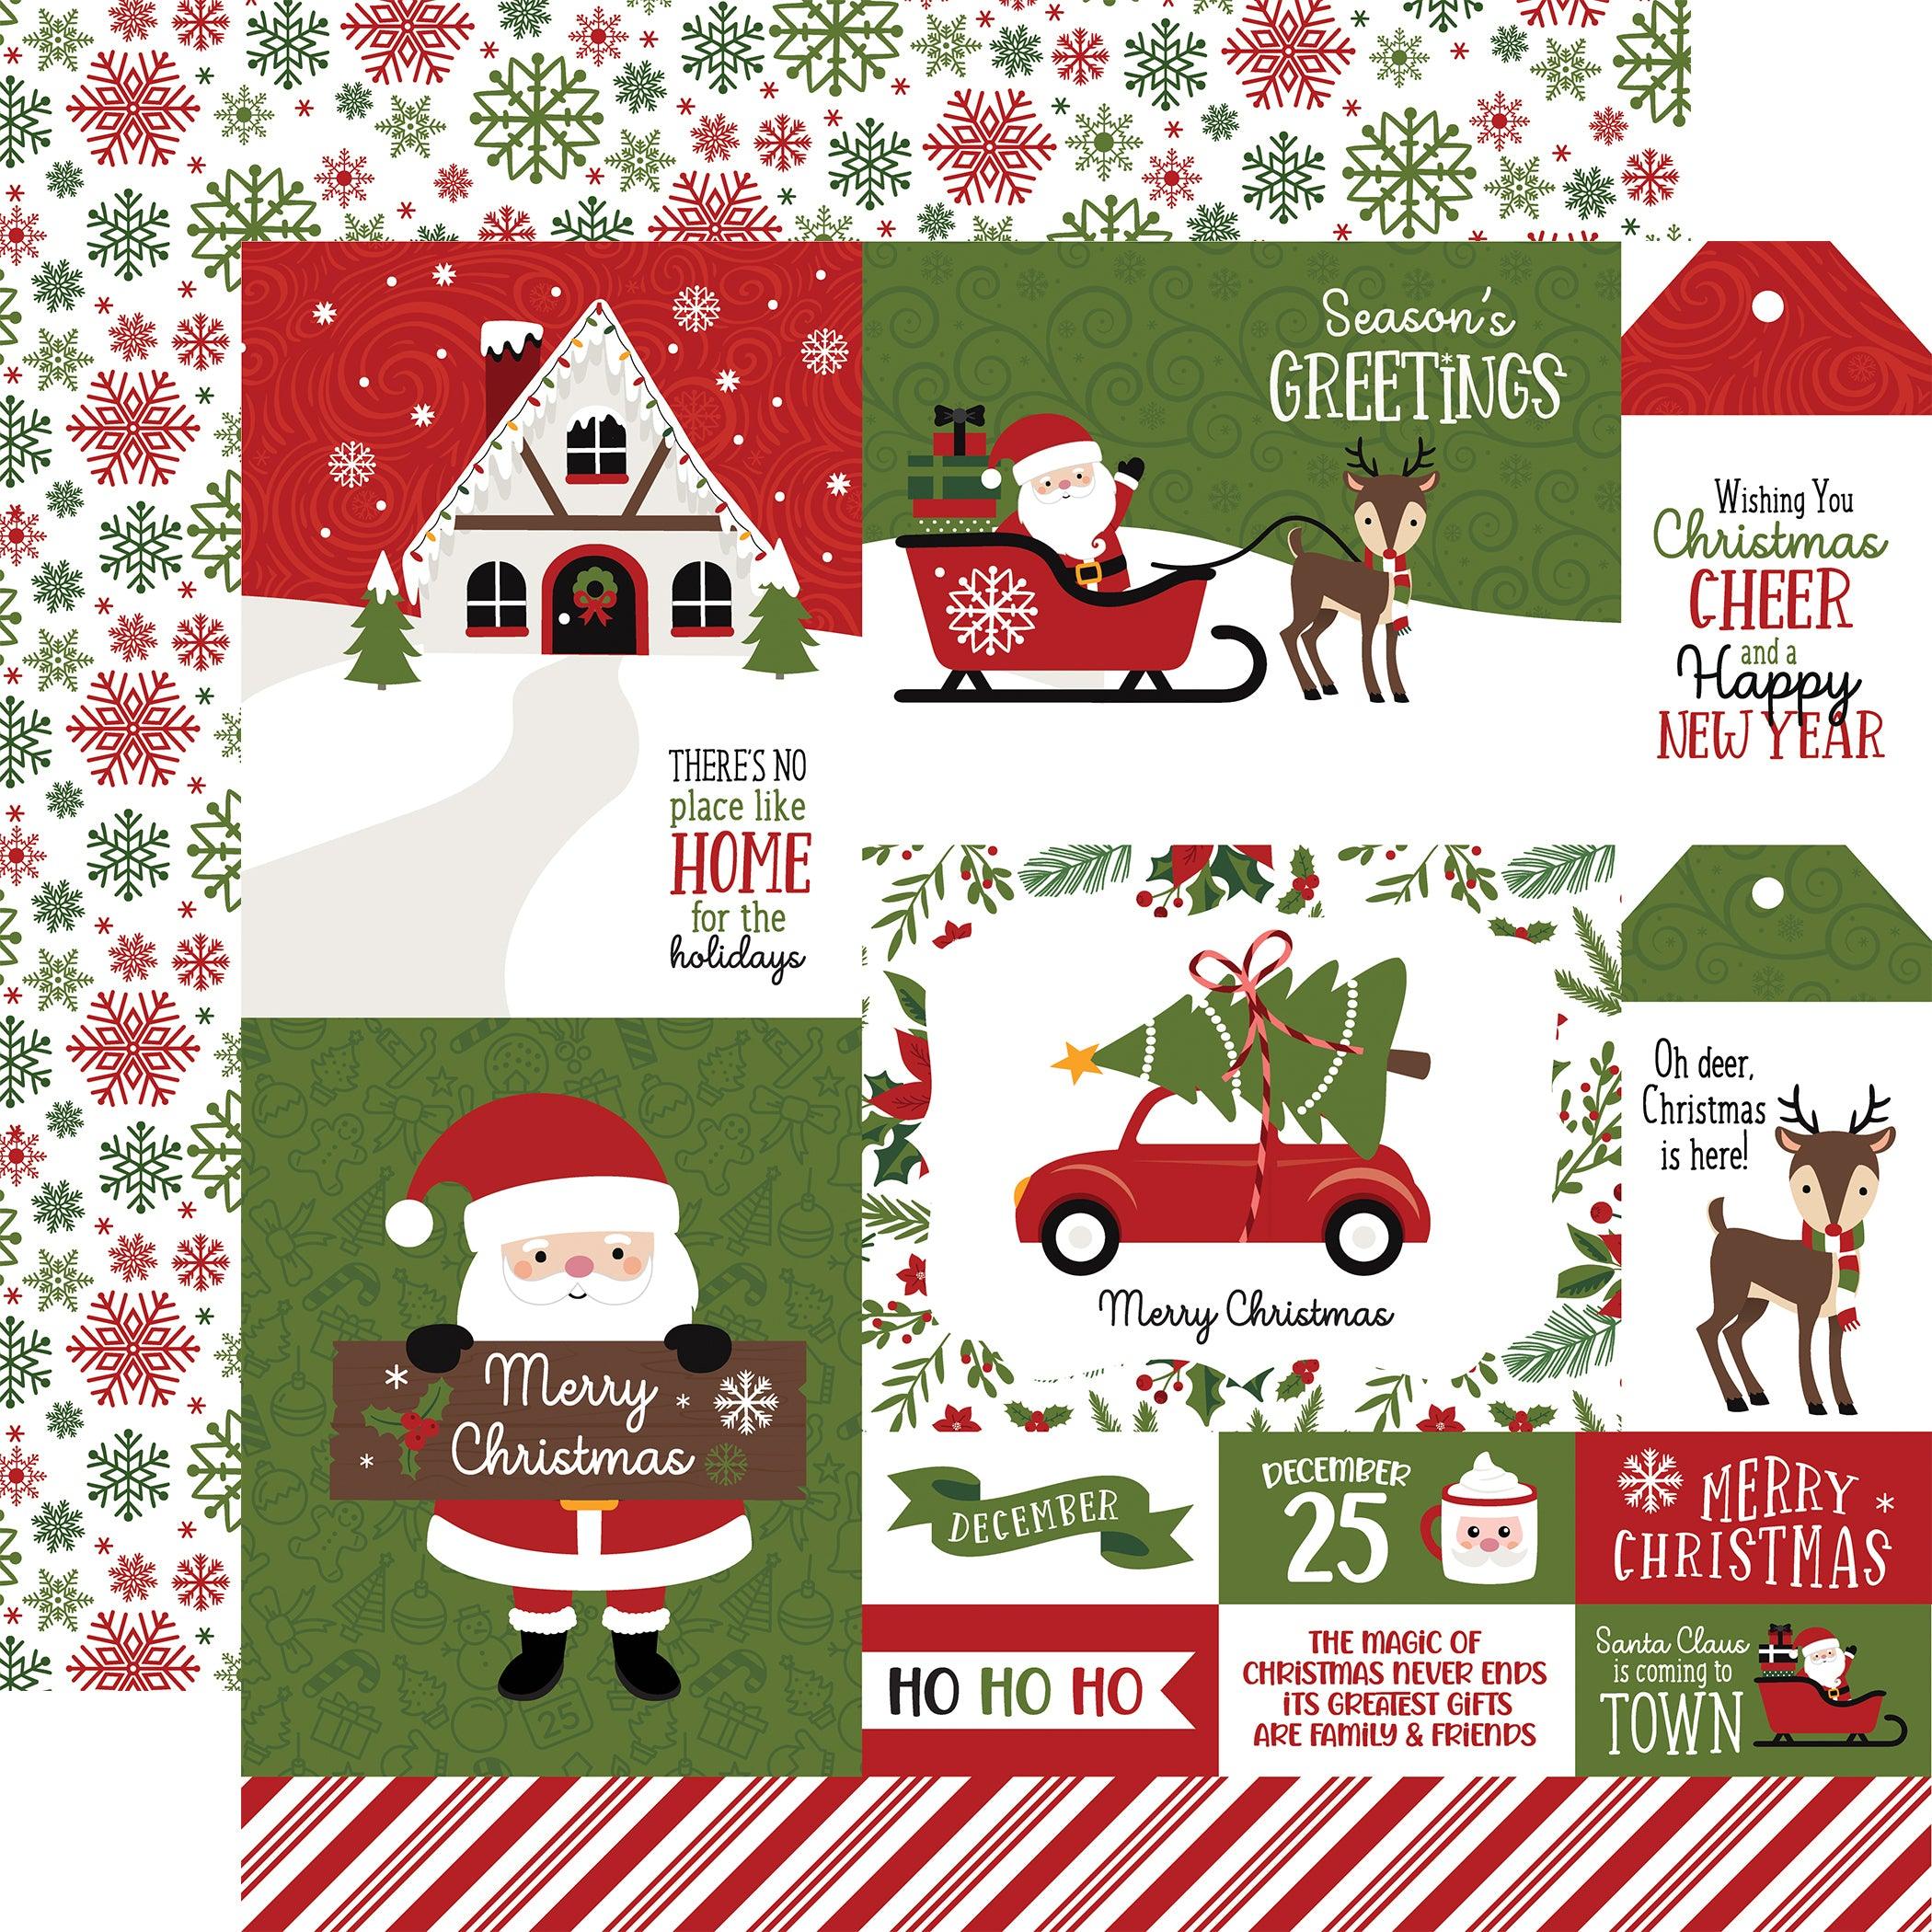 Elf Spread Christmas Cheer Tags 12 x 12 Scrapbook Paper – Fabbulous Paper  Emporium